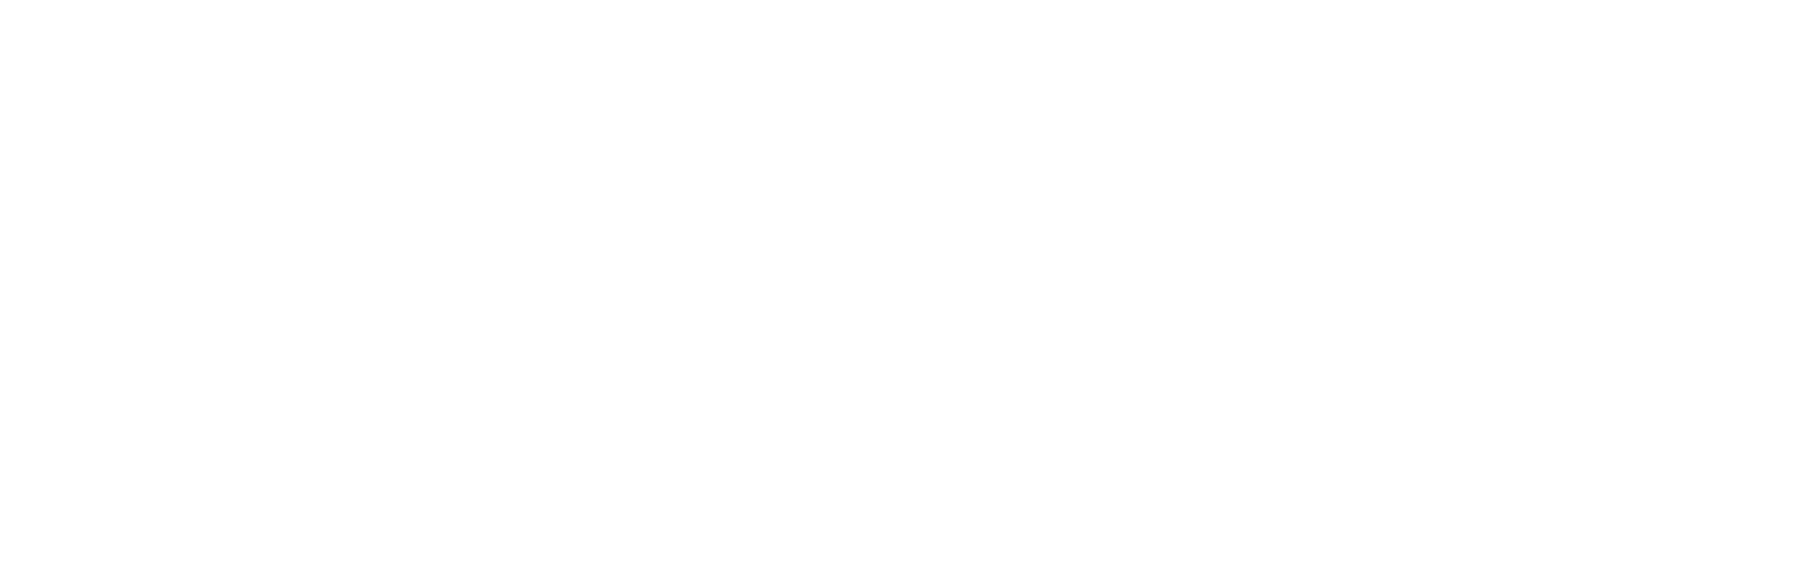 Jolly Good Christmas logo